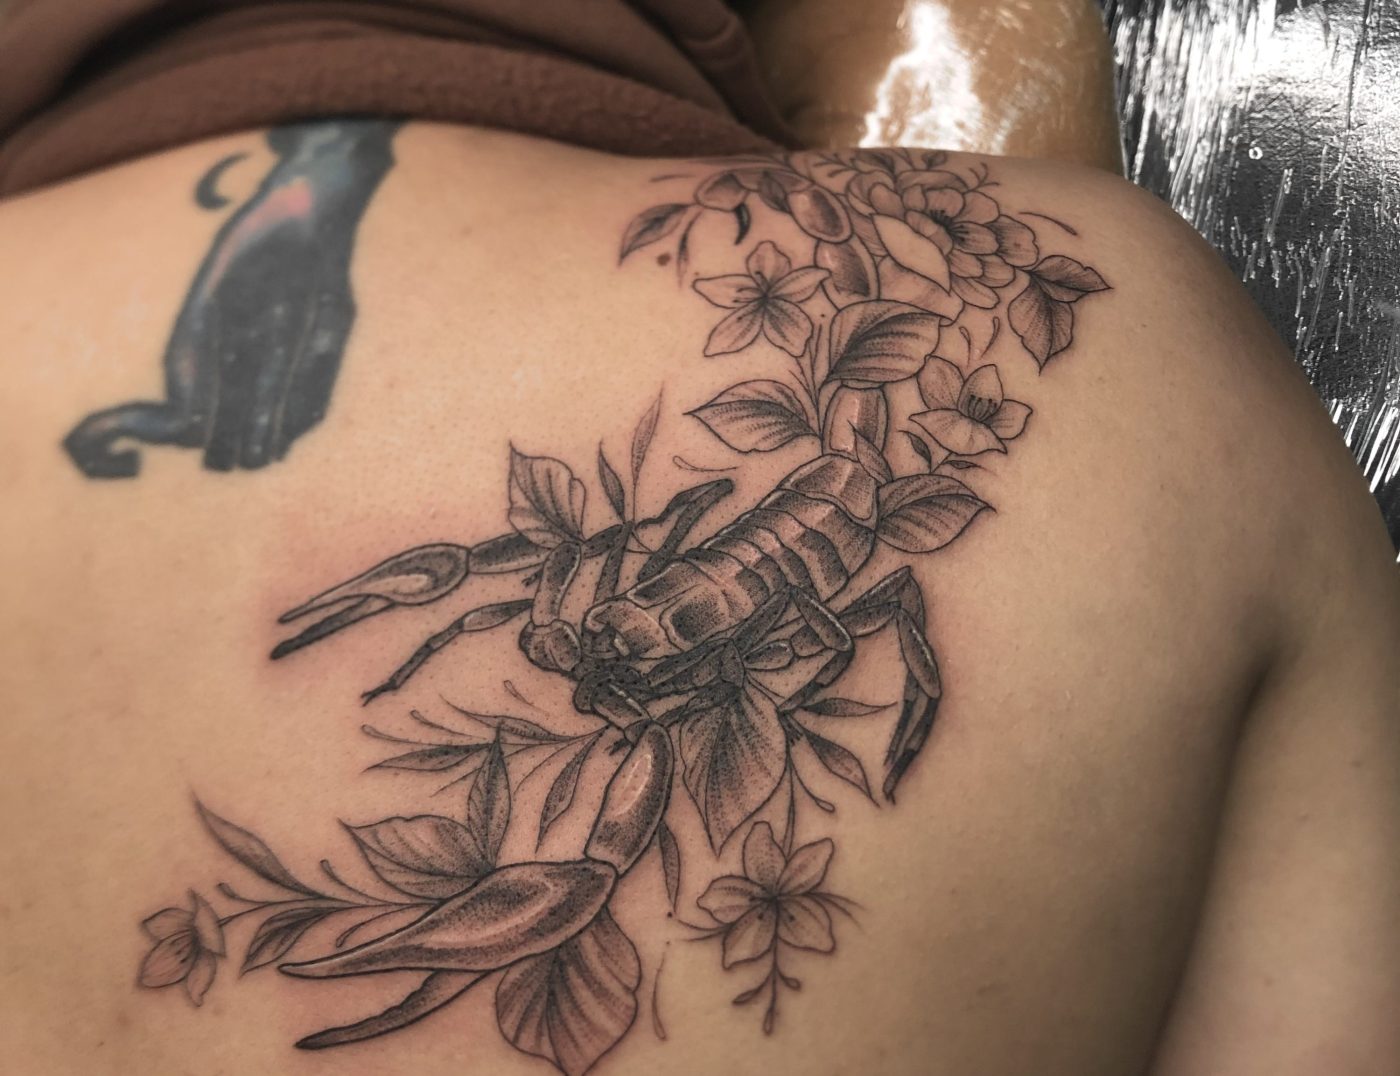 Scorpion And Flowers Blackwork Tattoo By Rene Cristobal.